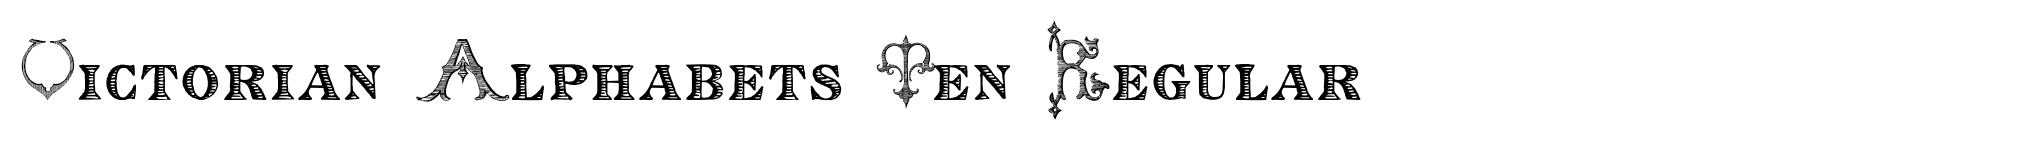 Victorian Alphabets Ten Regular image